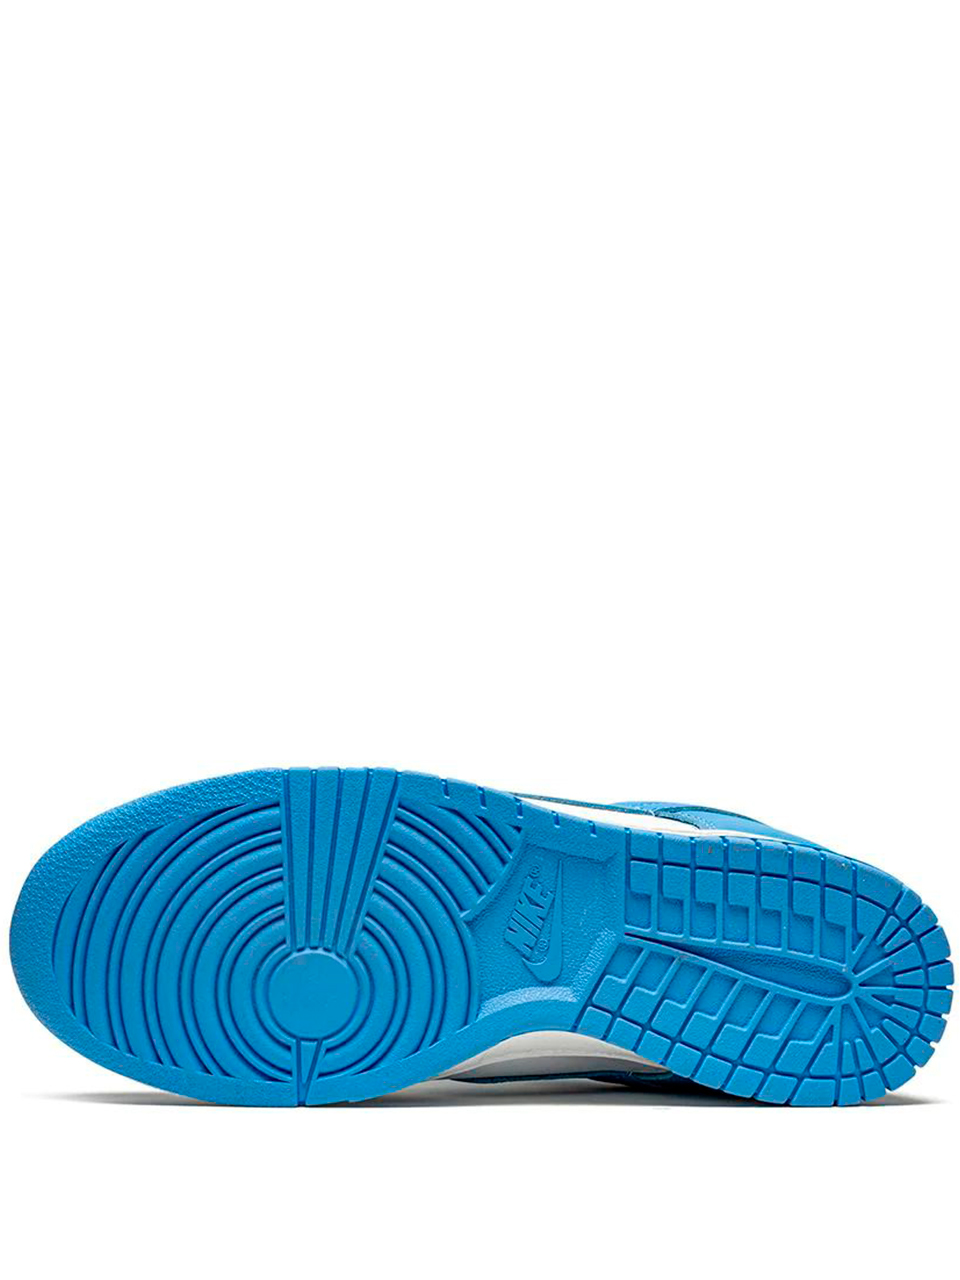 Imagem de: Tênis Nike SB Dunk Low Azul Claro